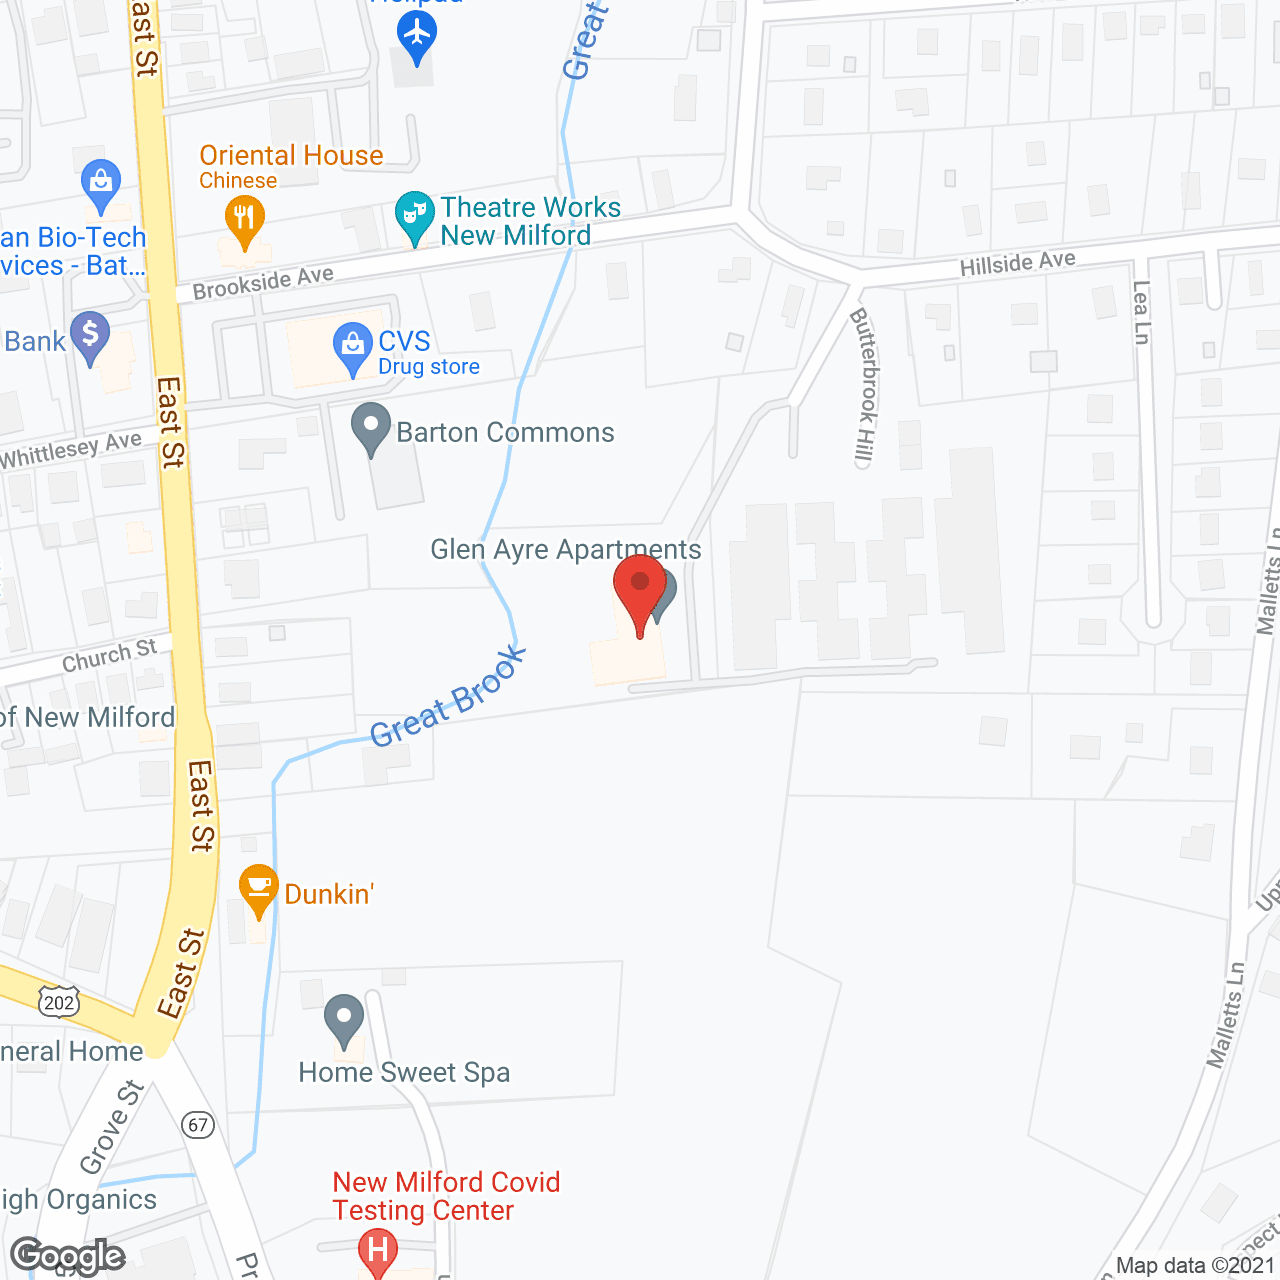 Glen Ayre Apartments in google map